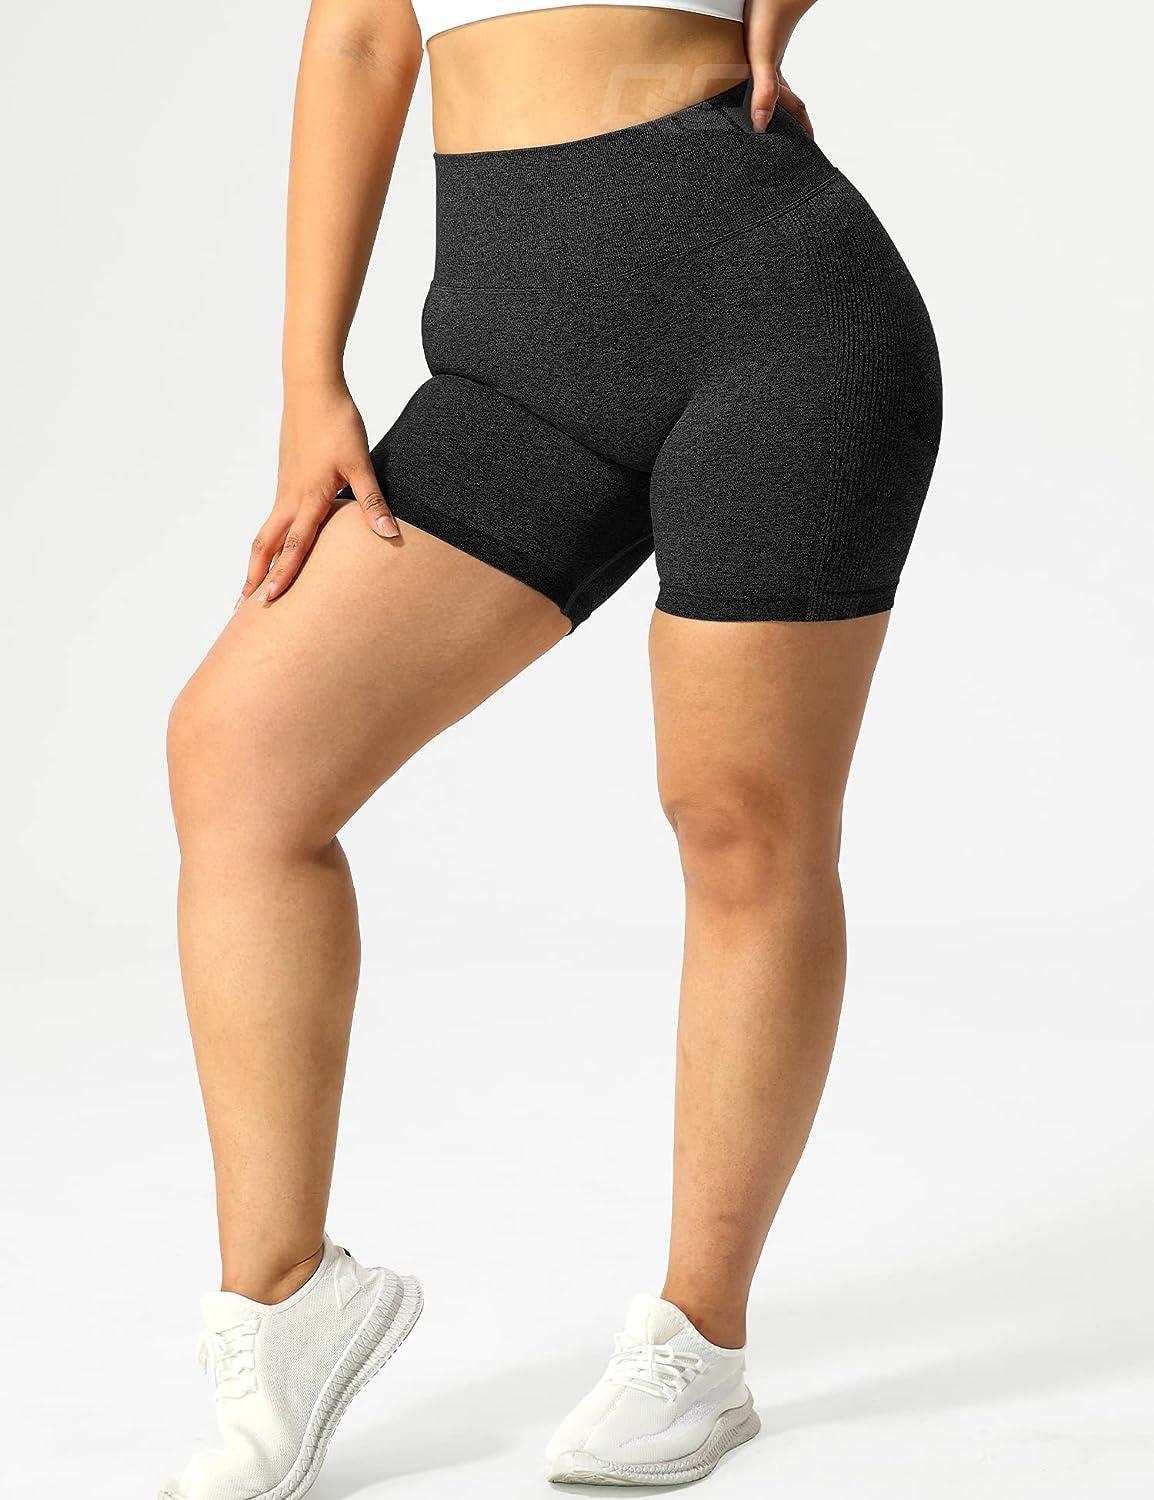 PMUYBHF Womens Loose Pants With Button 4Th of July Yoga Pants Plus Size  Women Seamless High Waist Shorts Biker Shorts Yoga Workout Short Pants 